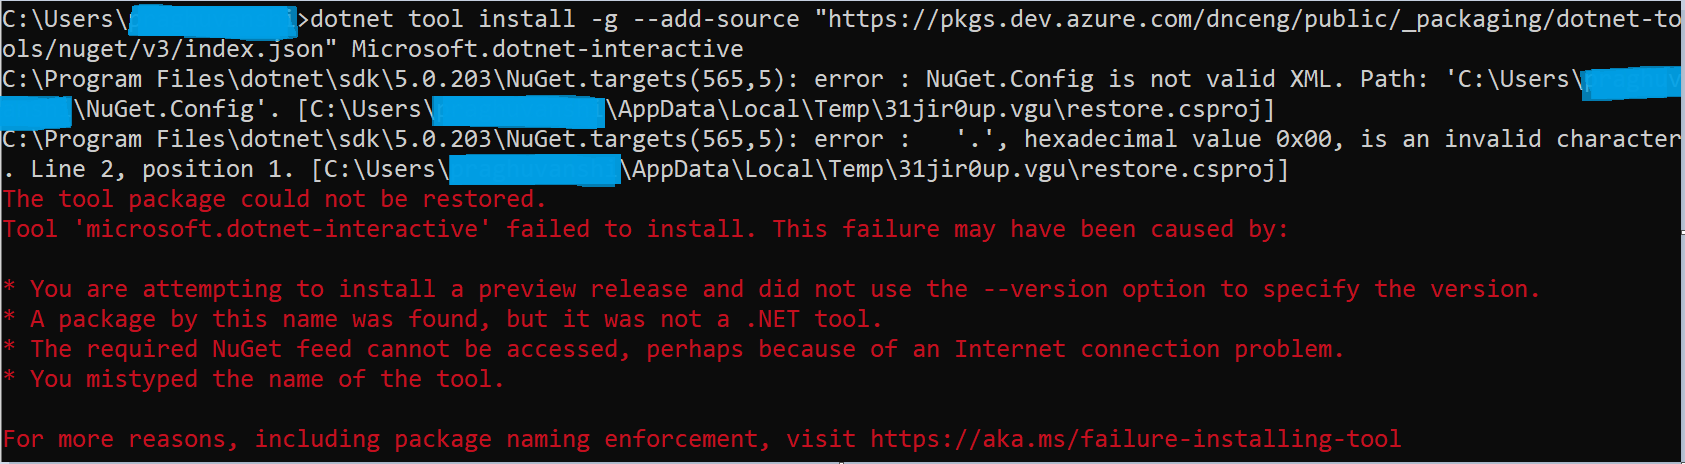 .Net Interactive failed to install